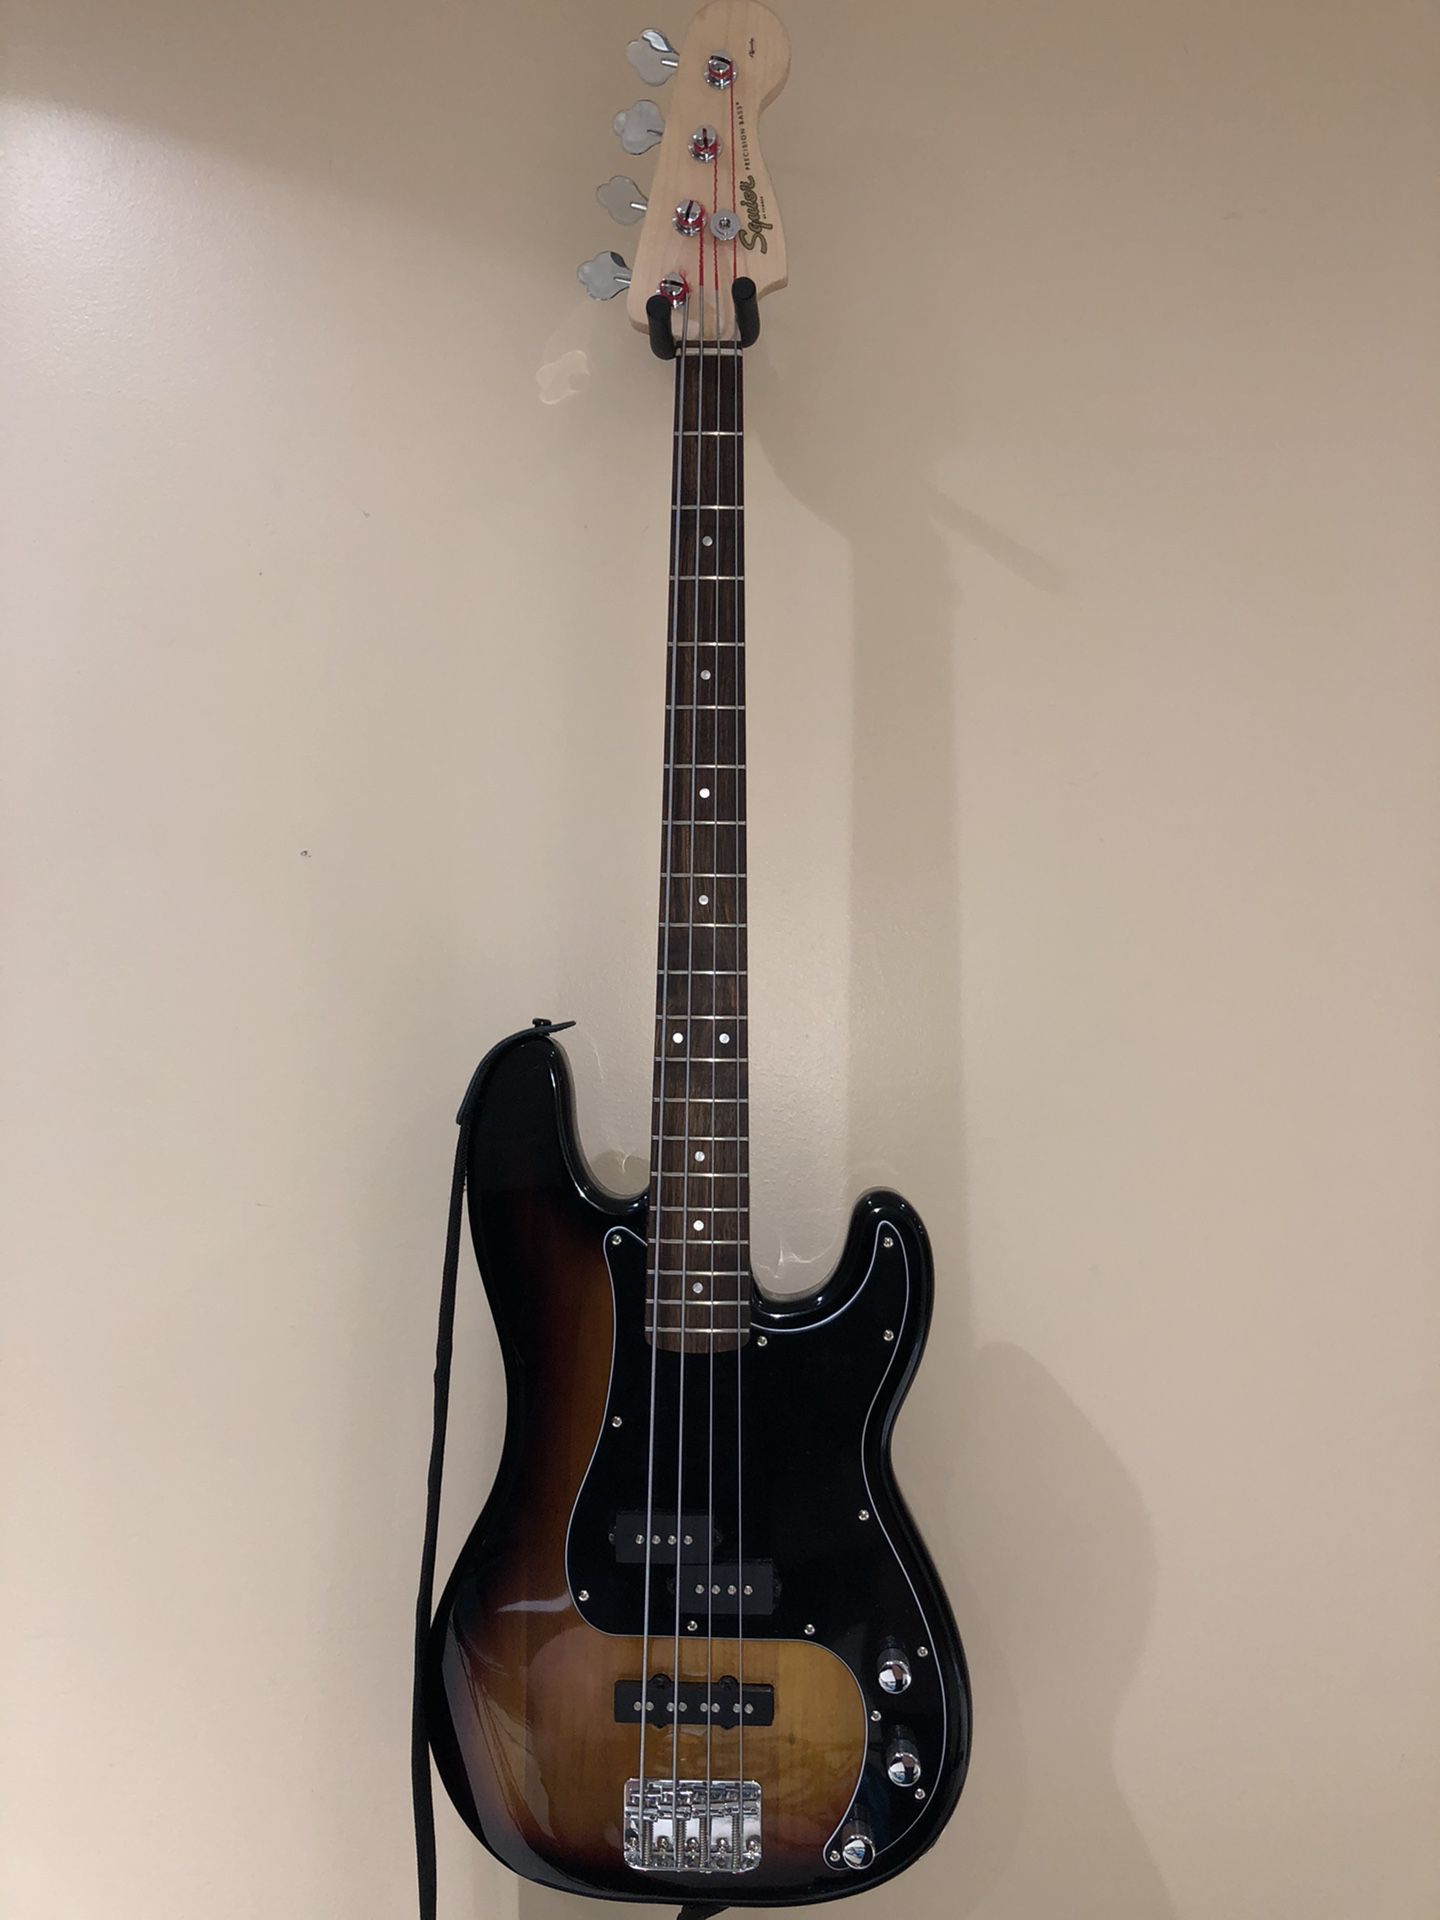 Fender Squire precision bass guitar